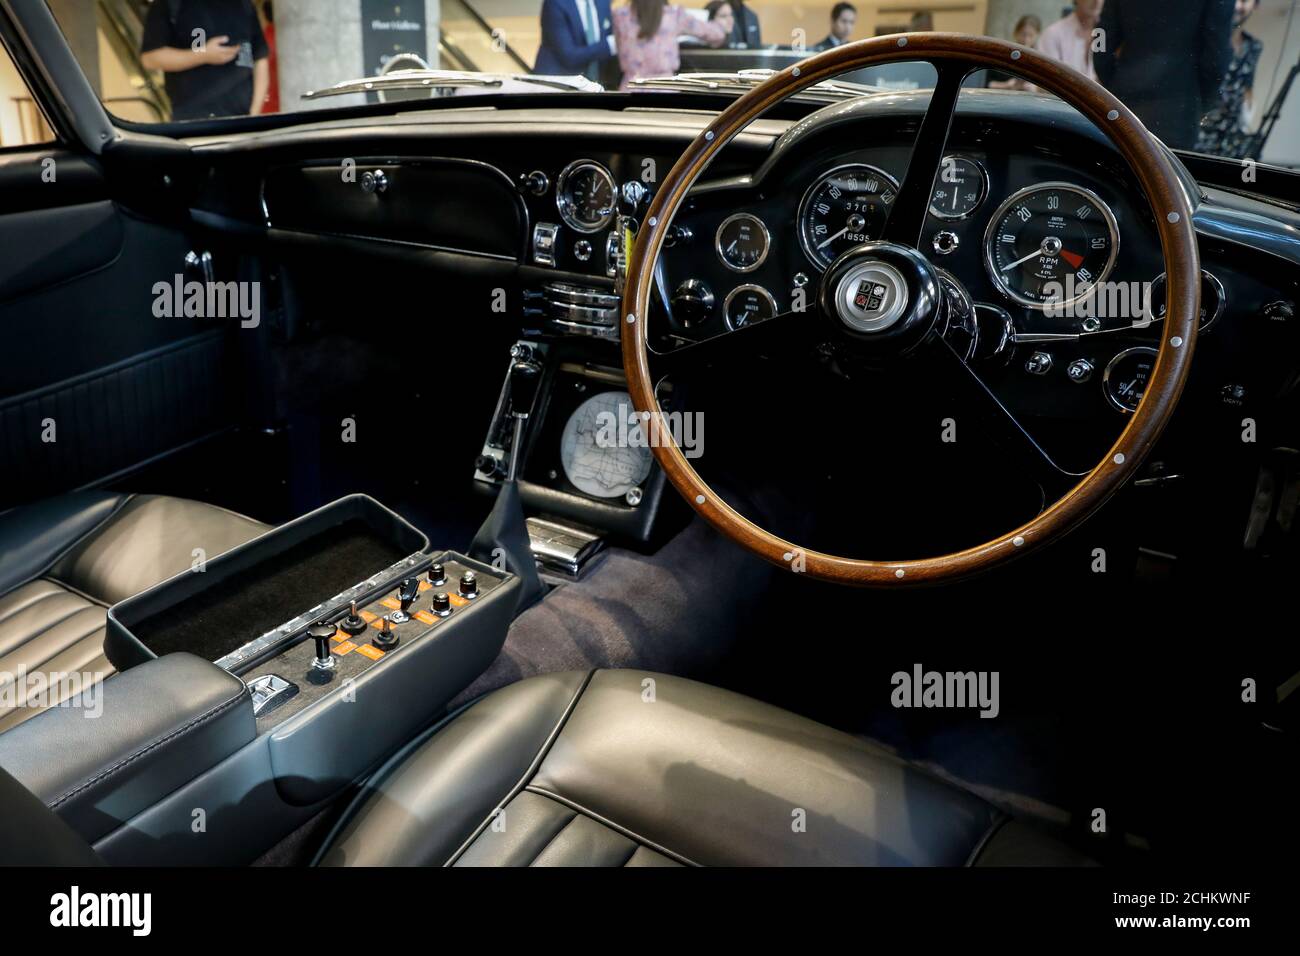 Aston martin interior james bond hi-res stock photography and images - Alamy